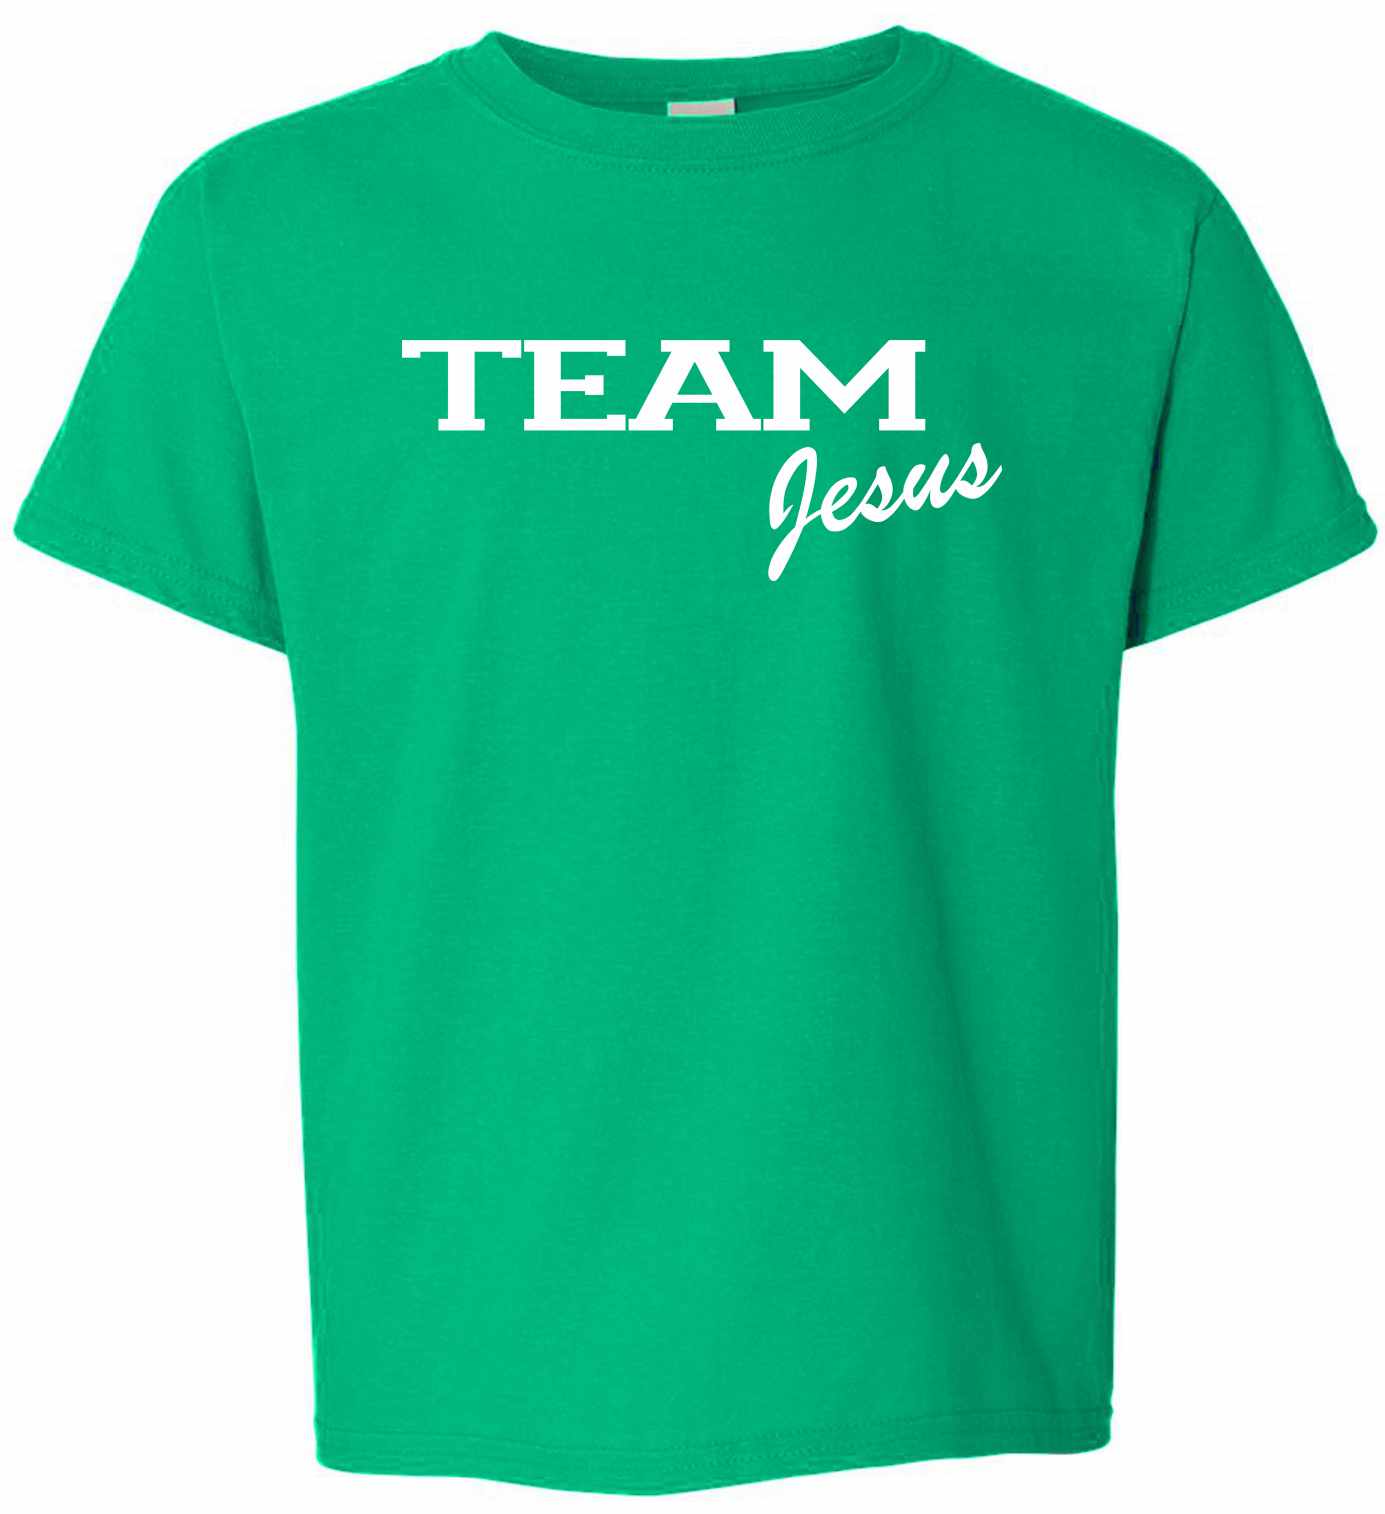 TEAM Jesus on Kids T-Shirt